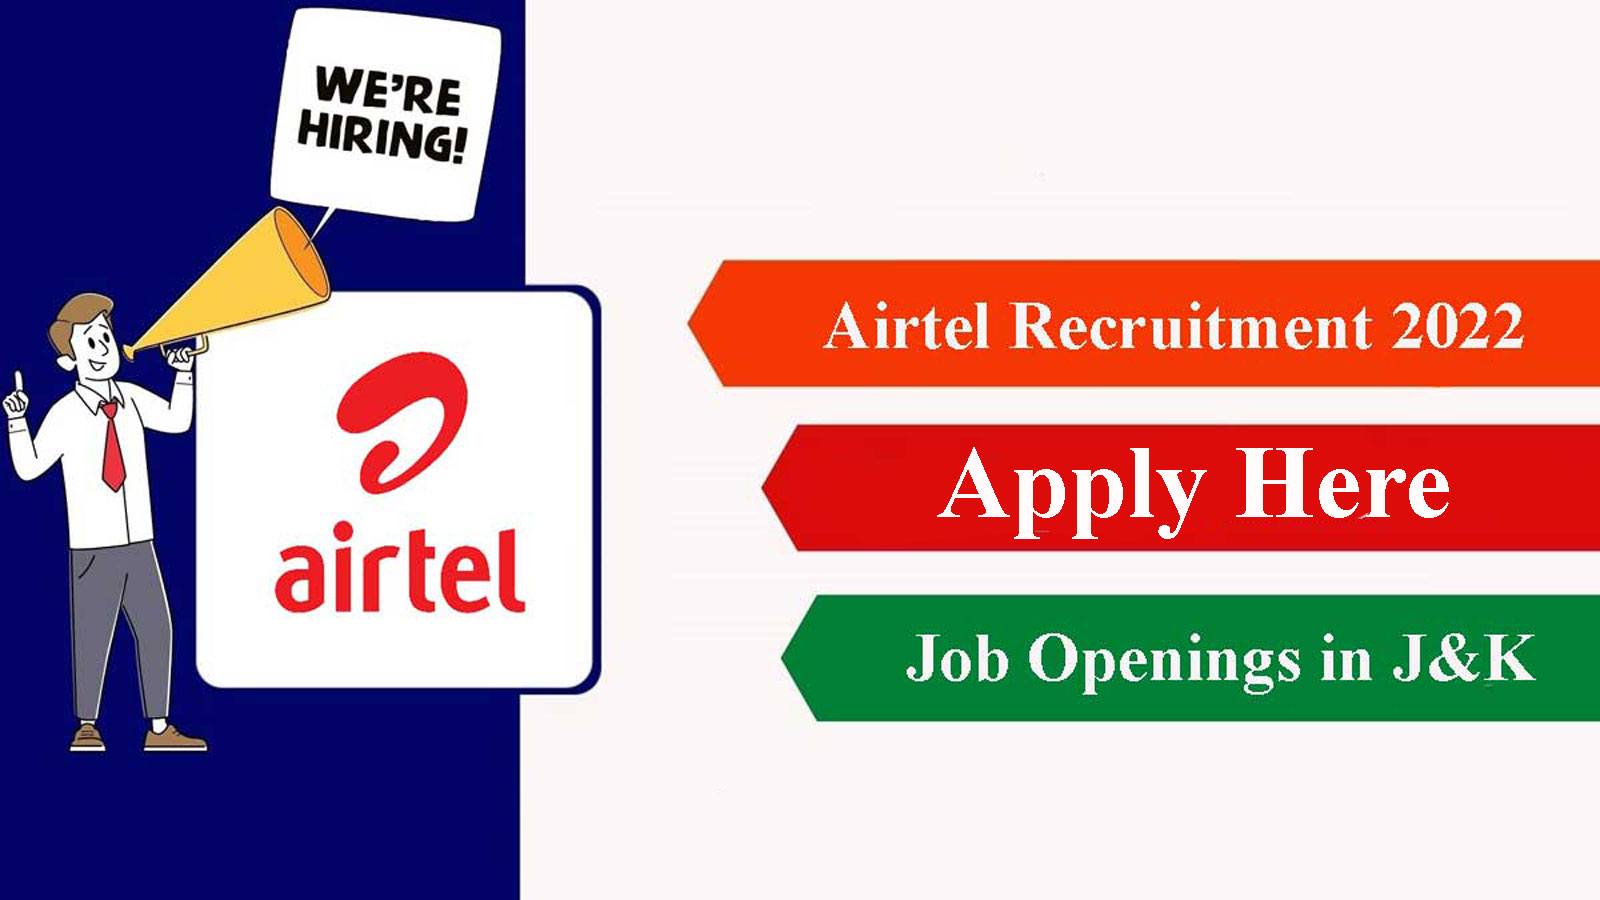 Airtel Srinagar Recruitment 2022, Qualification: 10+2 and above